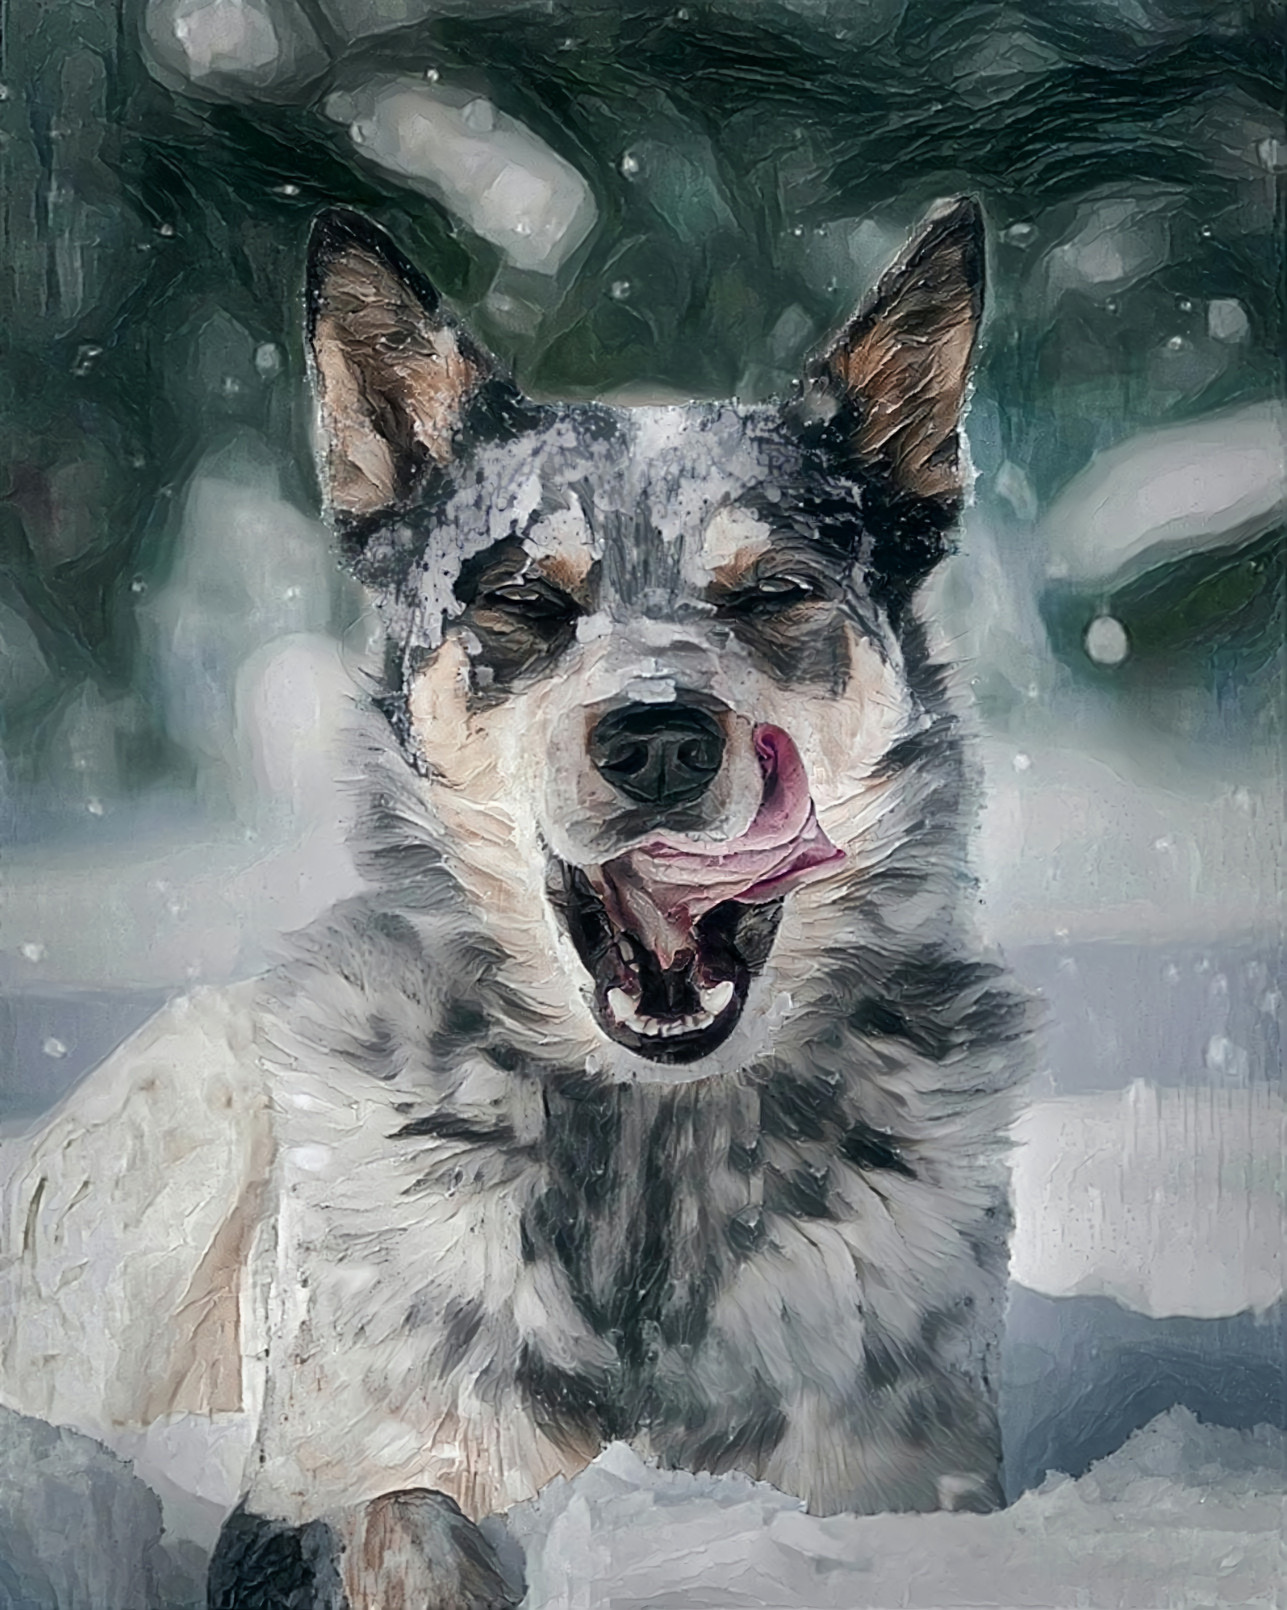 Snow Dog.  Original photo by Daniel Lincoln on Unsplash.